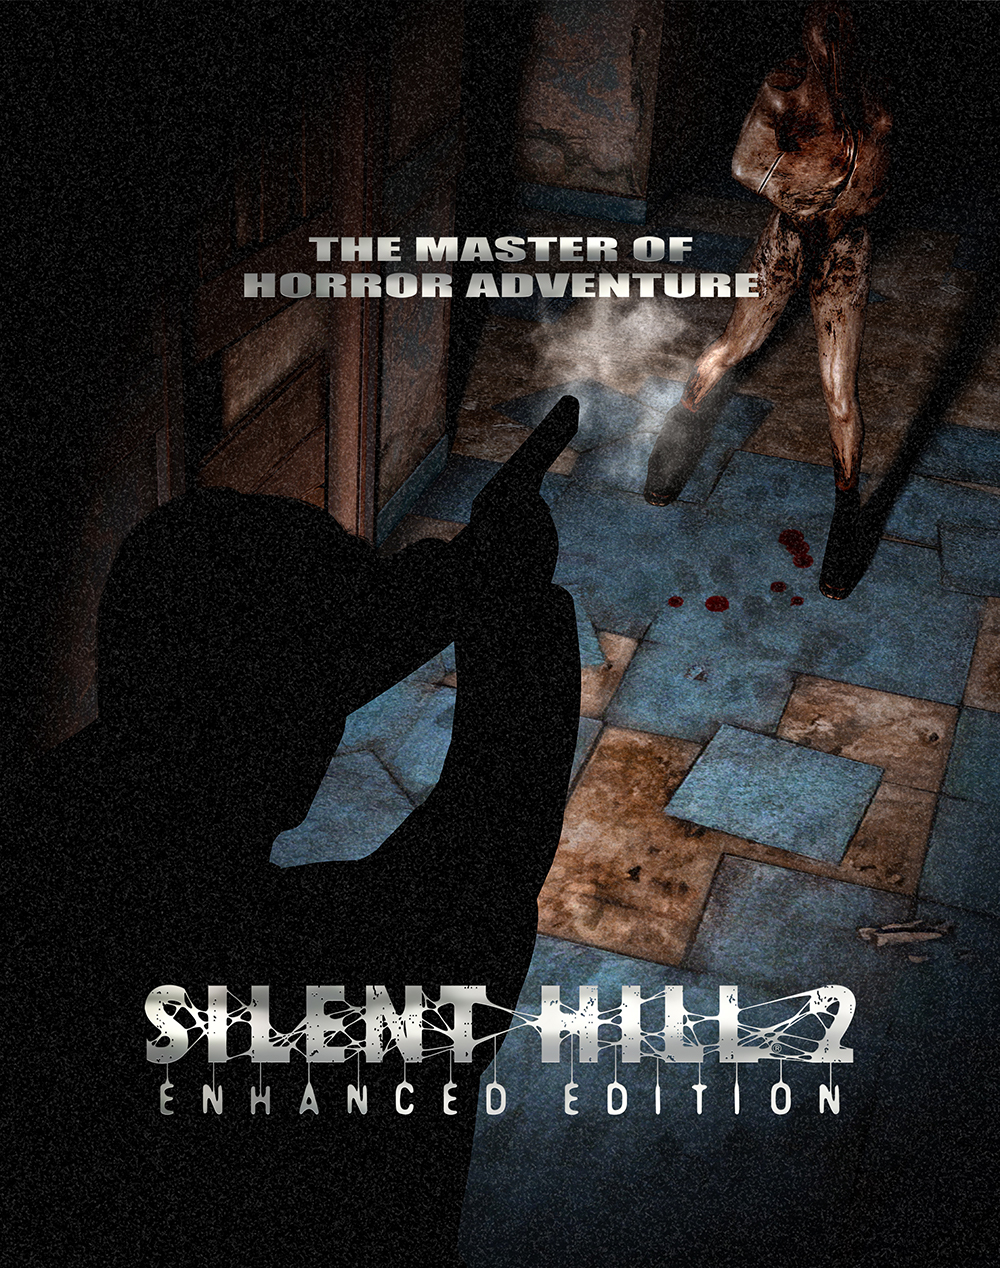 Silent Hill 2: Enhanced Edition Trailer